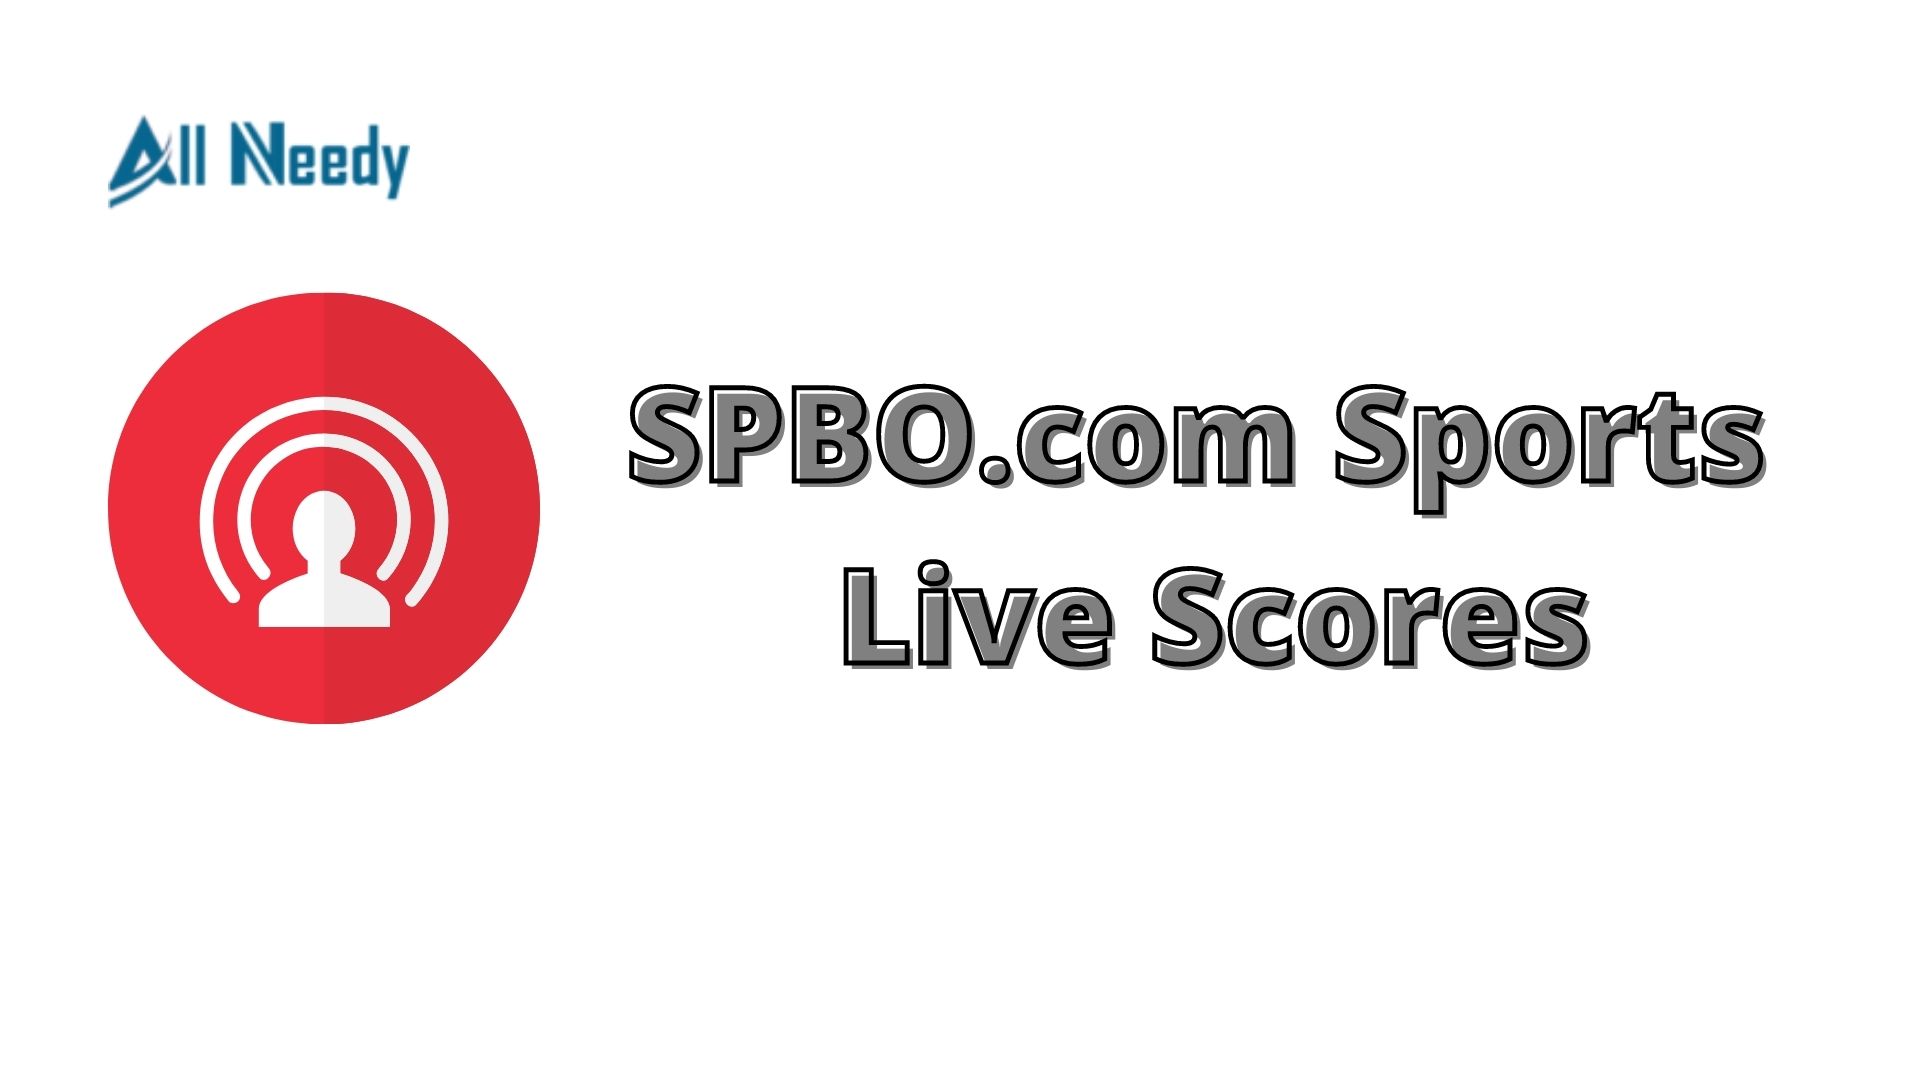 public/uploads/2022/01/SPBO.com-Sports-Live-Scores.jpg